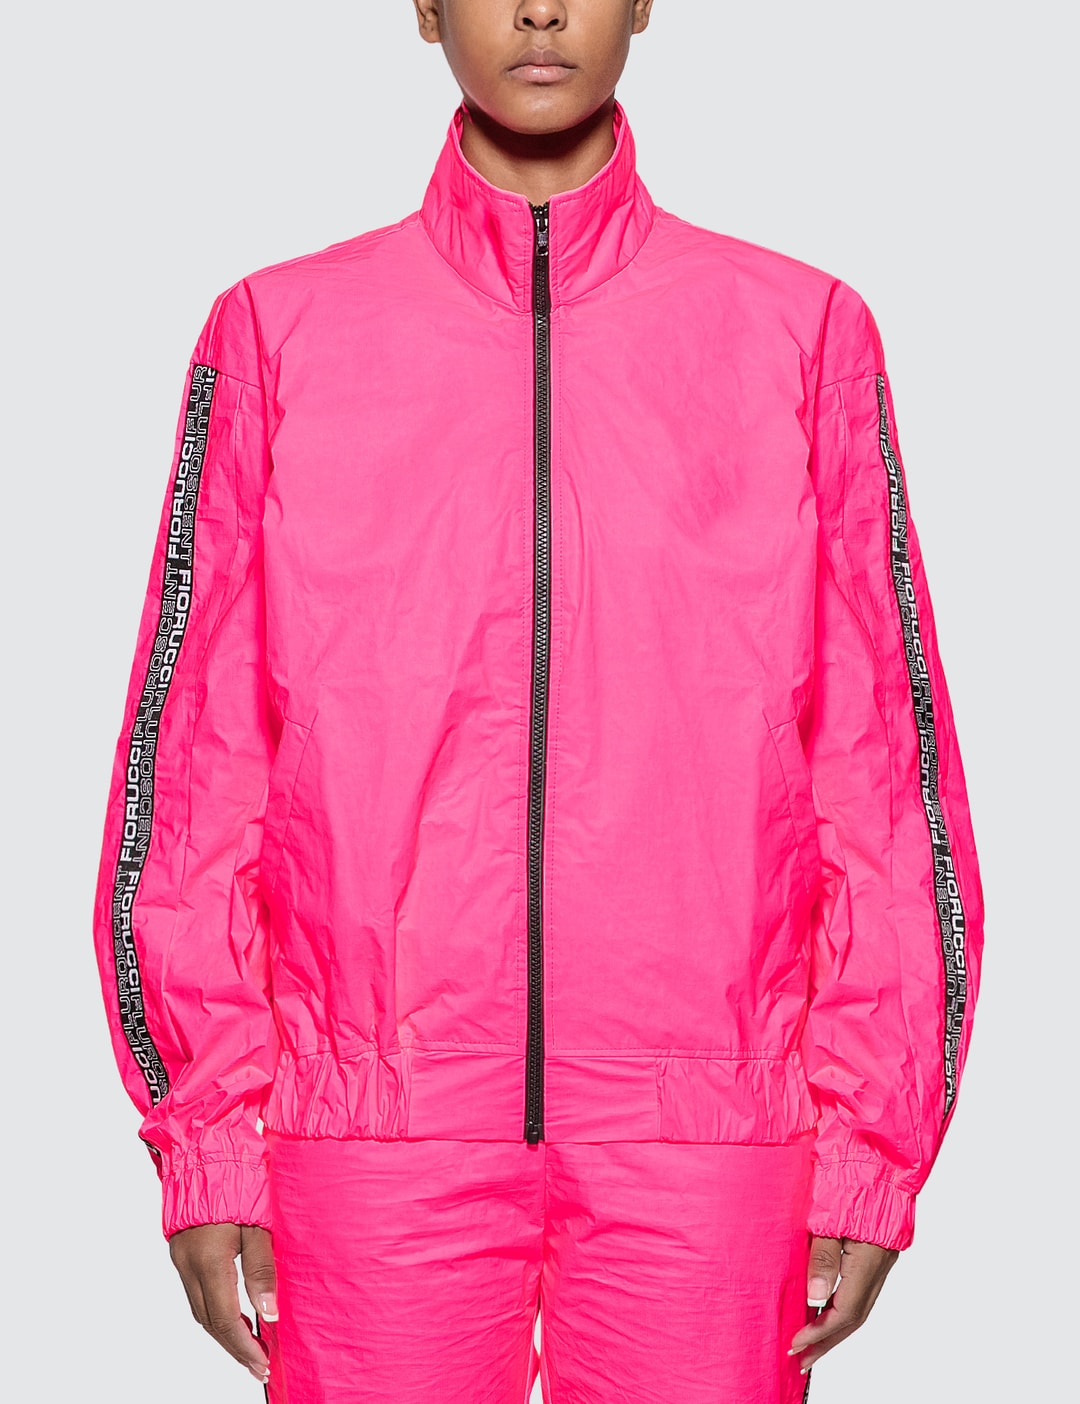 Tyvek Neon Pink Bomber Jacket Placeholder Image